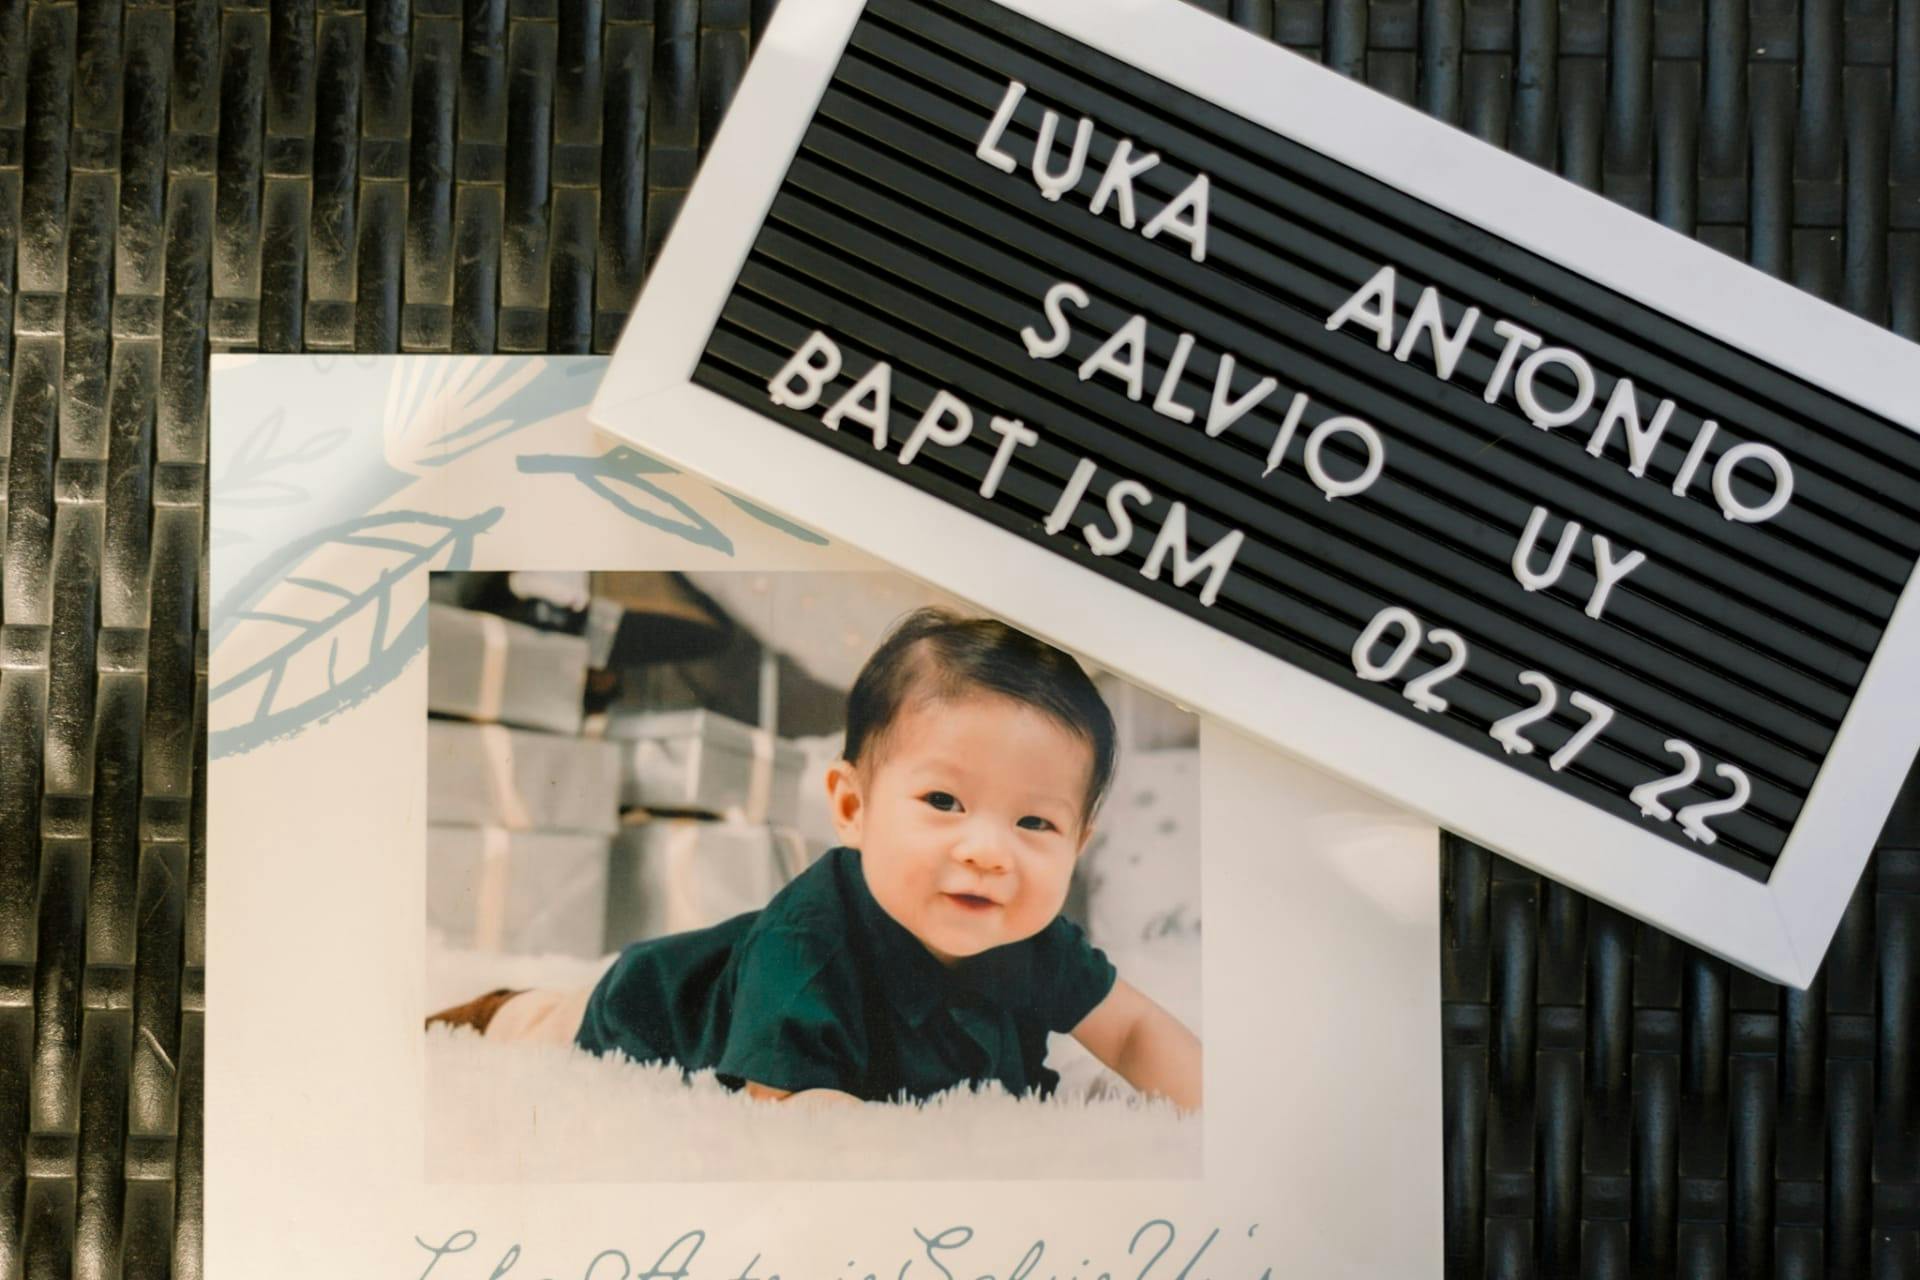 Uno's baptismal image